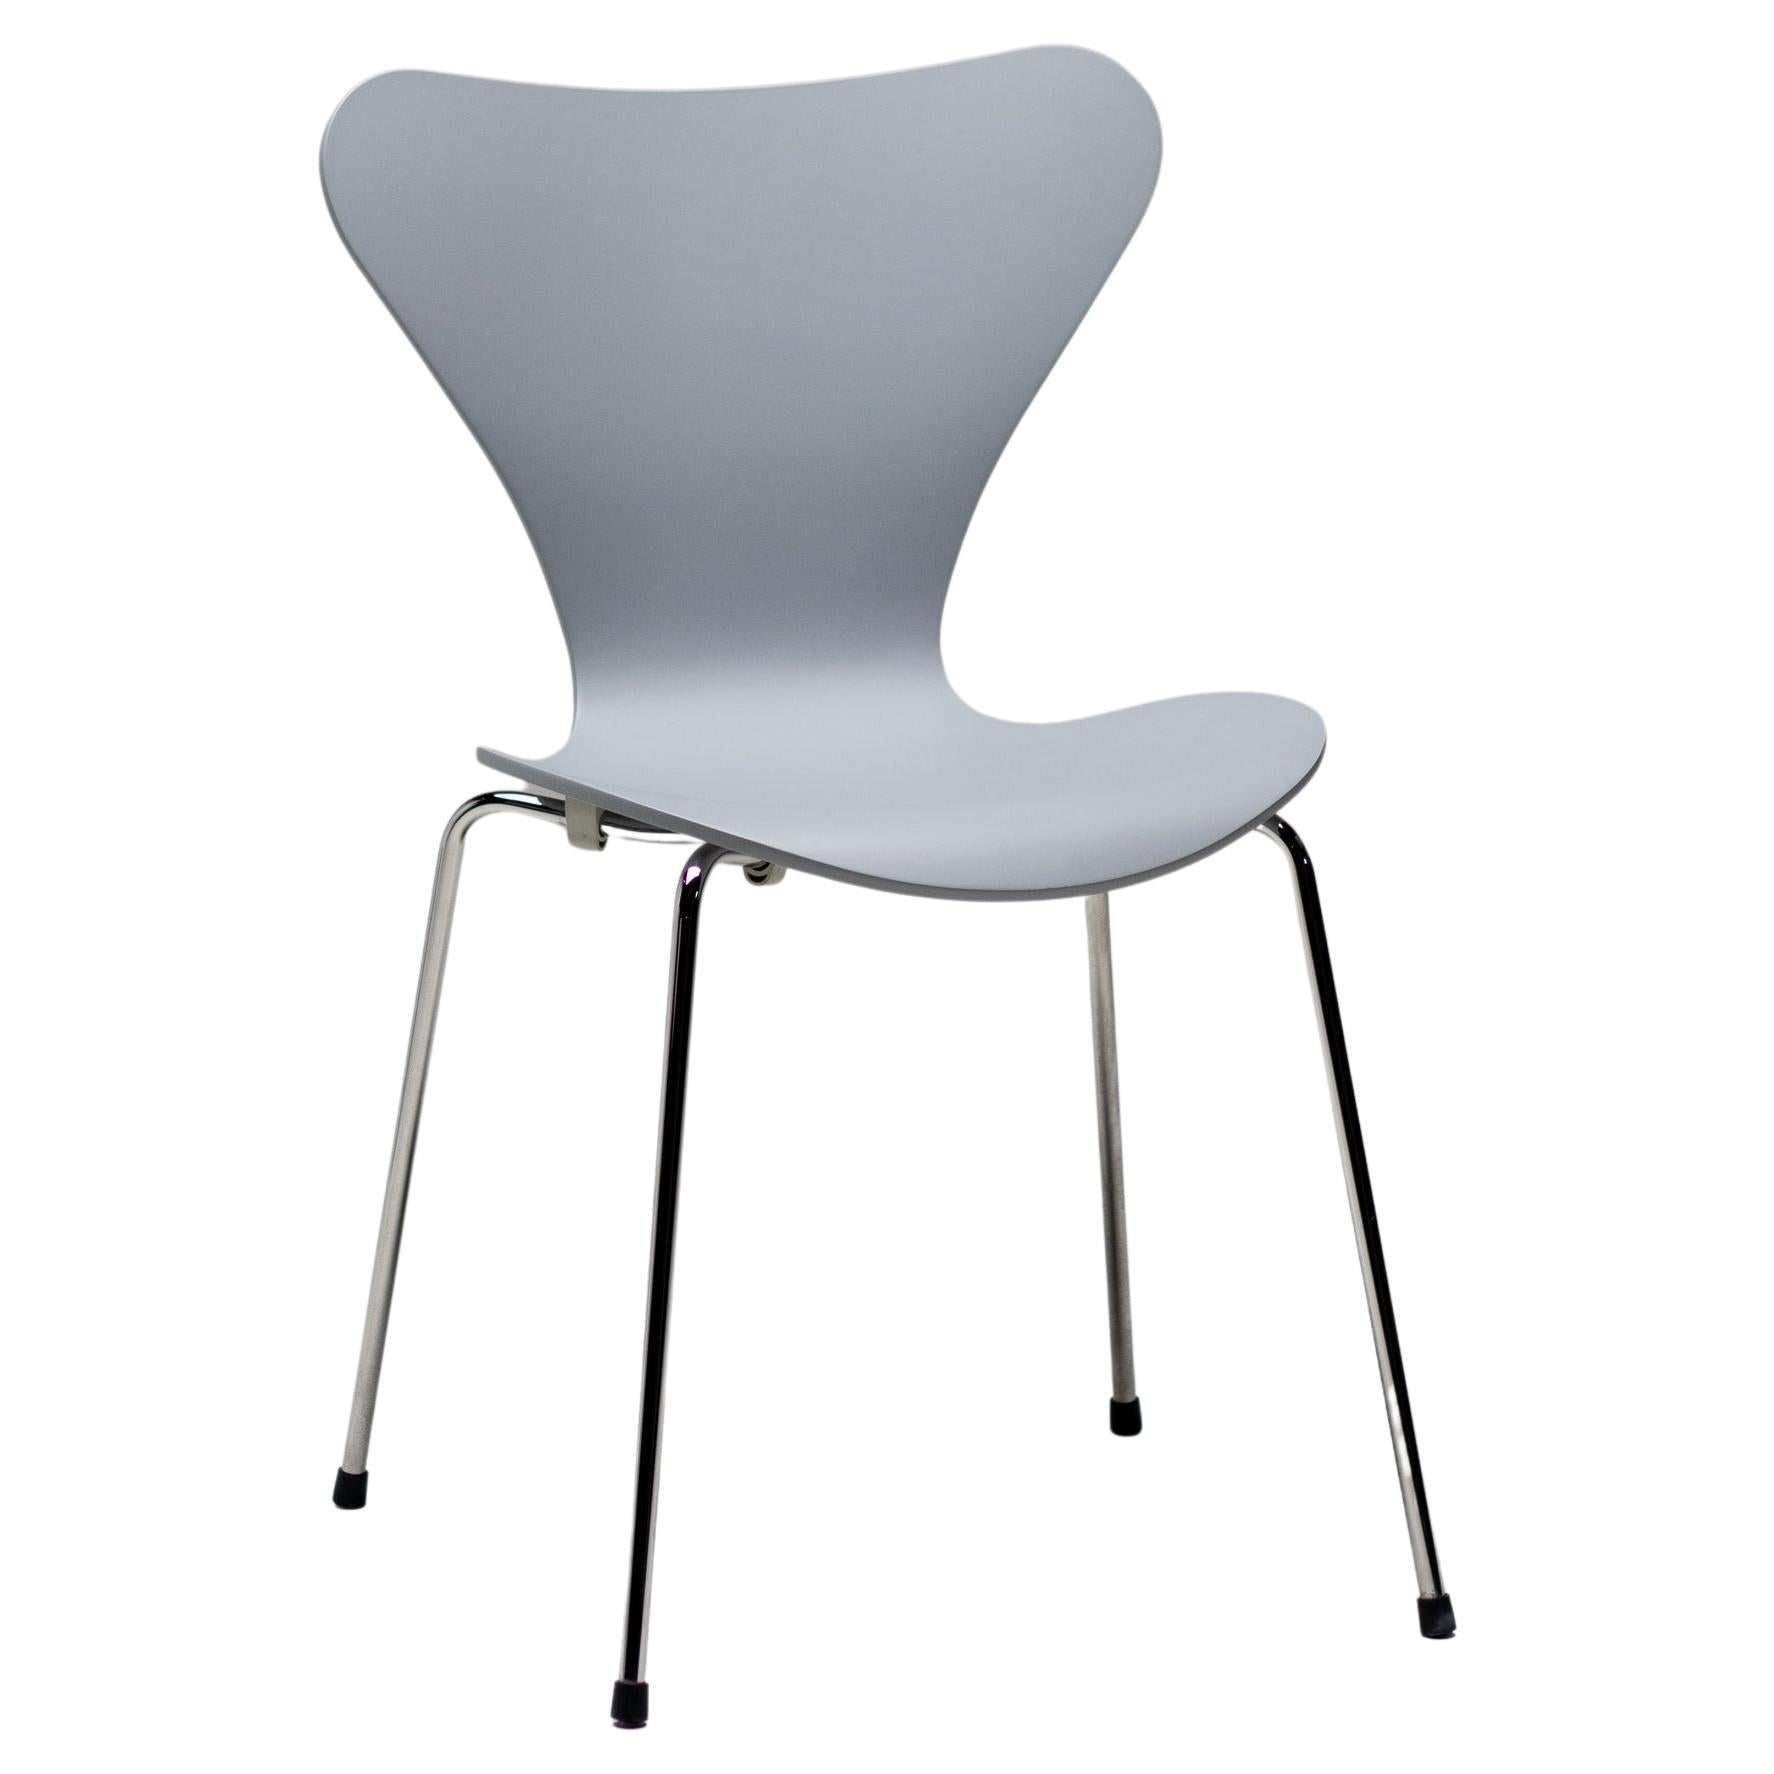 Maarten Baas Signed Limited Edition Arne Jacobsen Series 7 Chair